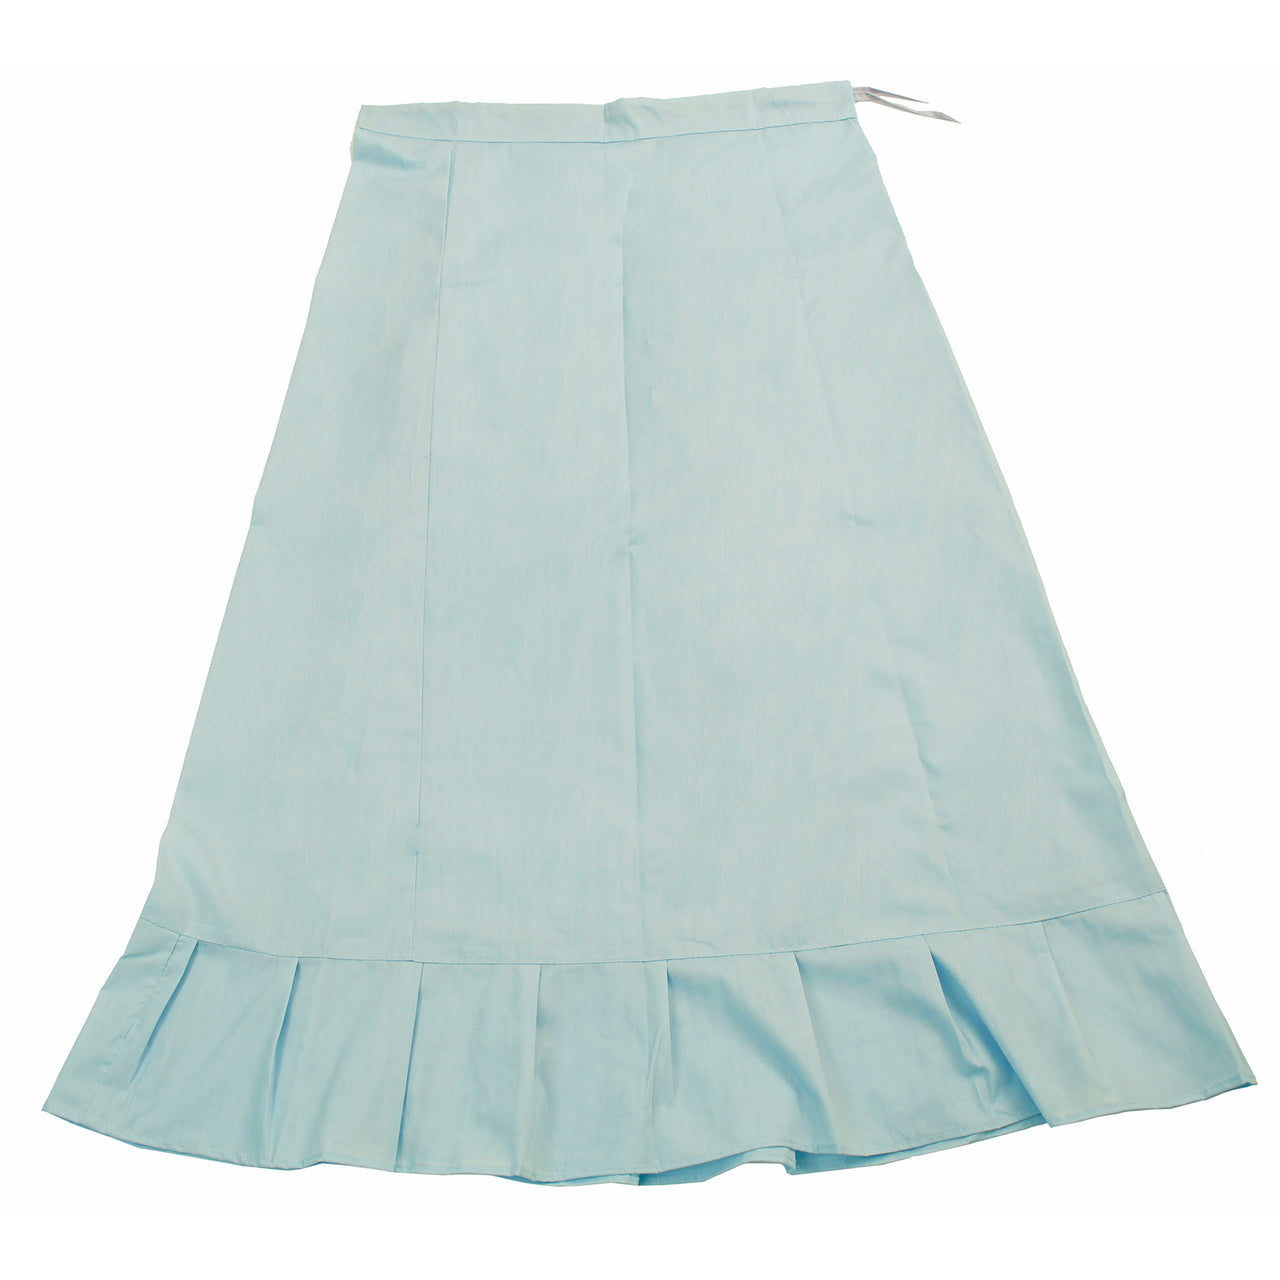 Sky Blue - Sari (Saree) Petticoat - Available in S, M, L & XL - Underskirts For Sari's